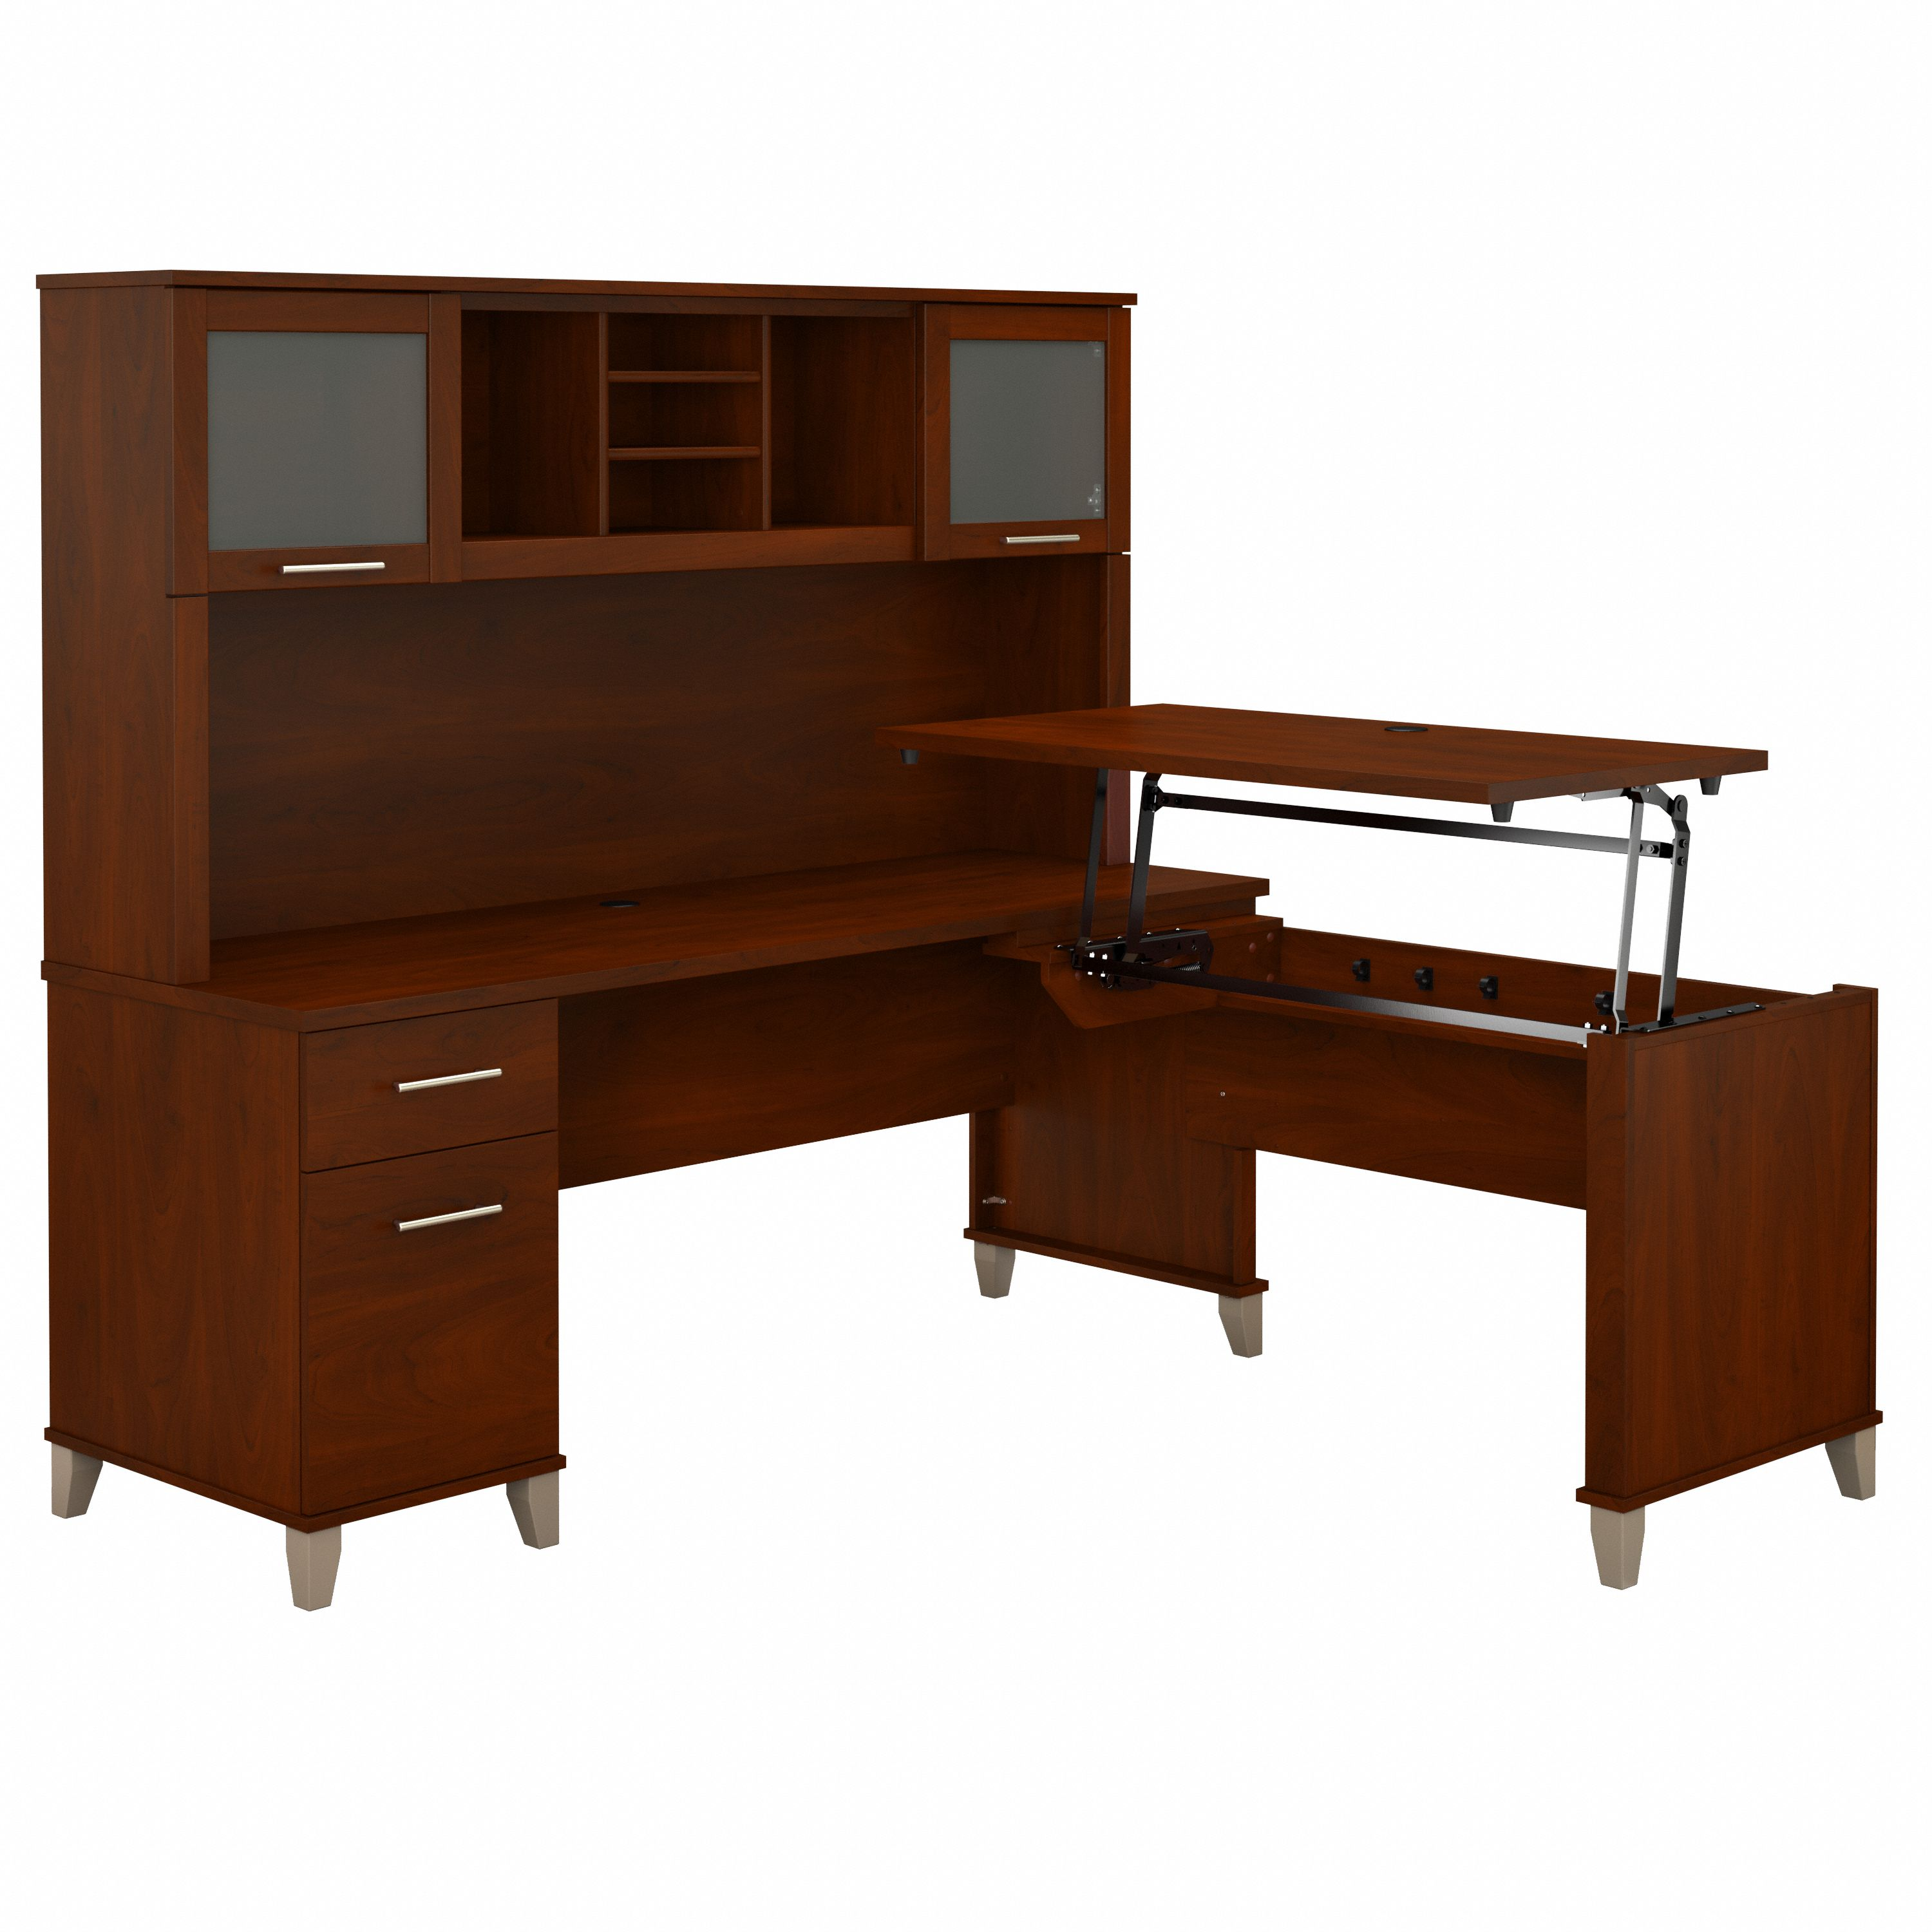 Shop Bush Furniture Somerset 72W 3 Position Sit to Stand L Shaped Desk with Hutch 02 SET015HC #color_hansen cherry